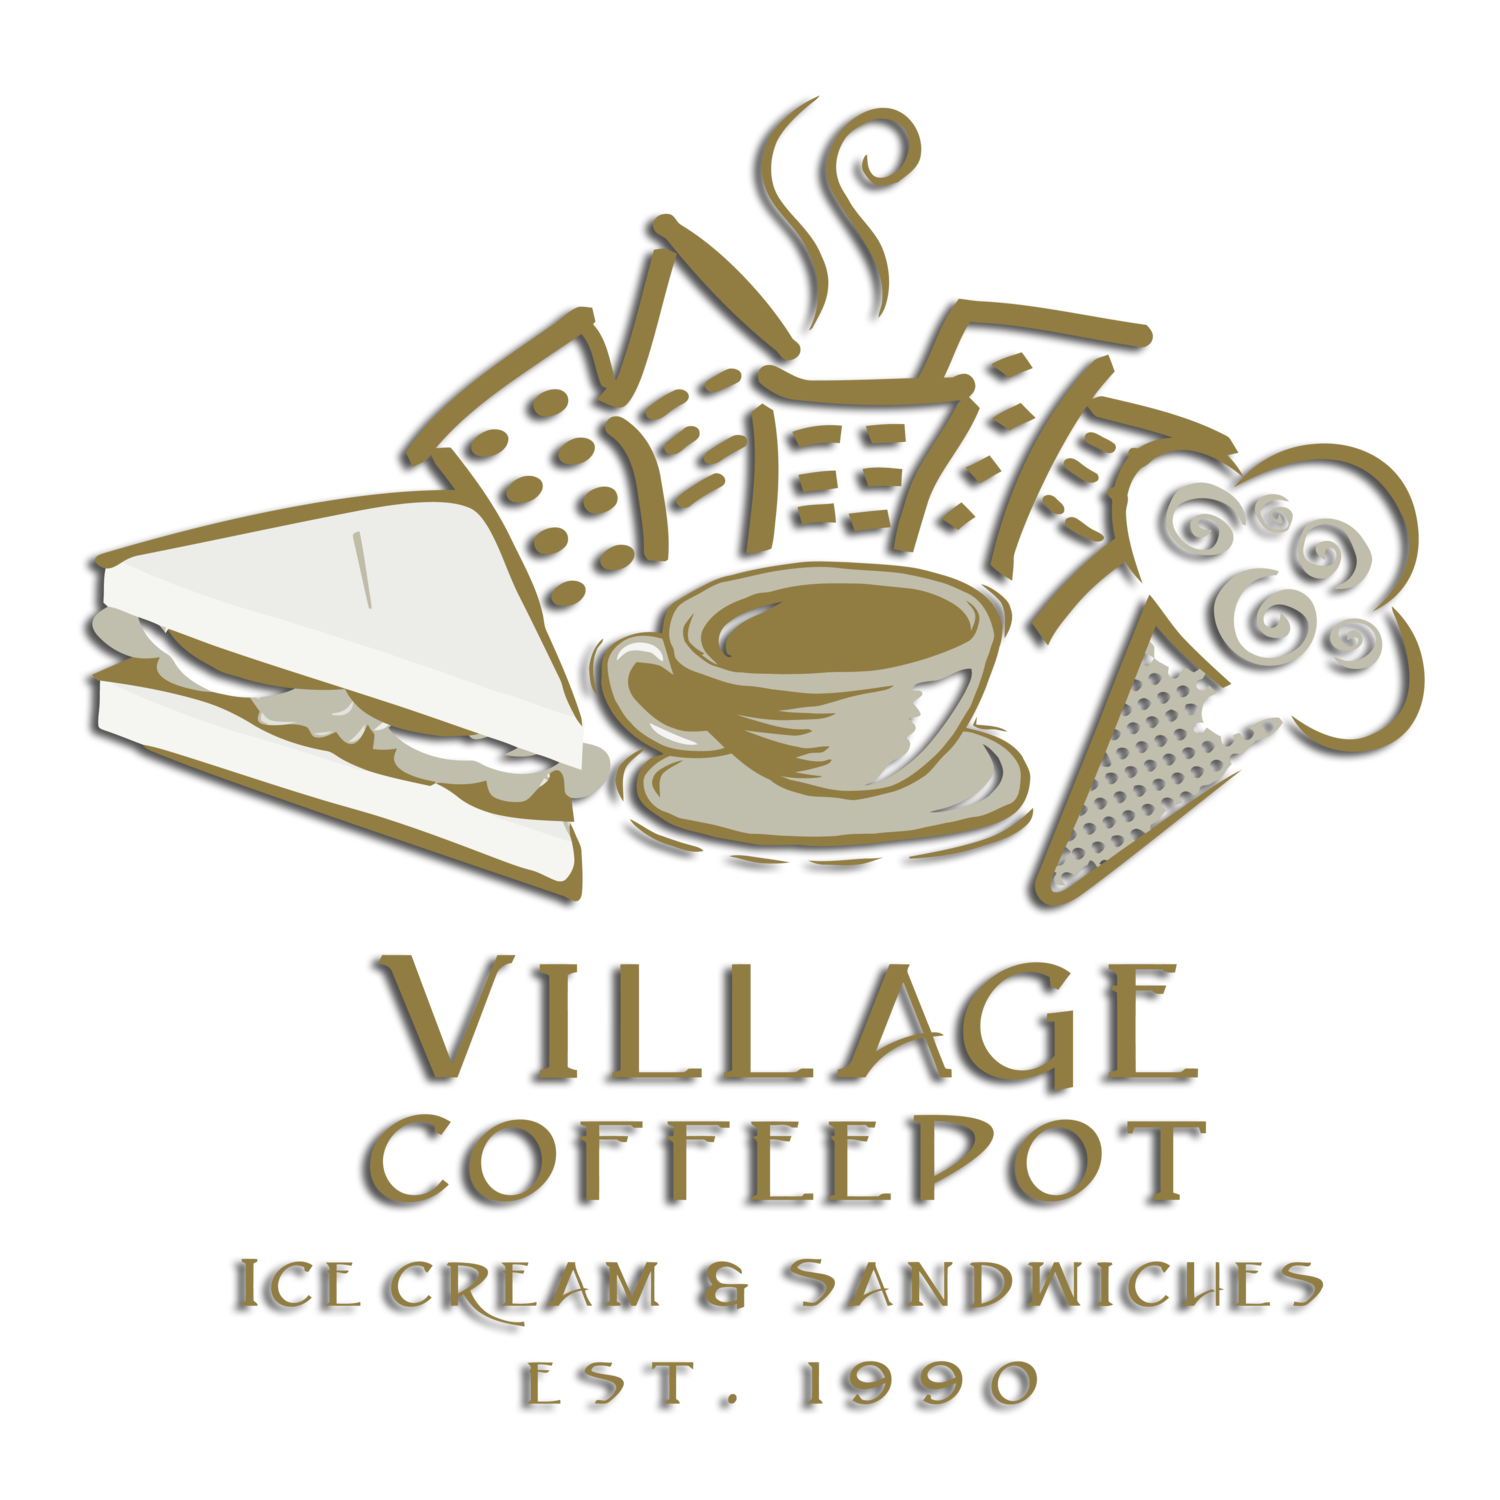 Village Coffee Pot of Mount Dora